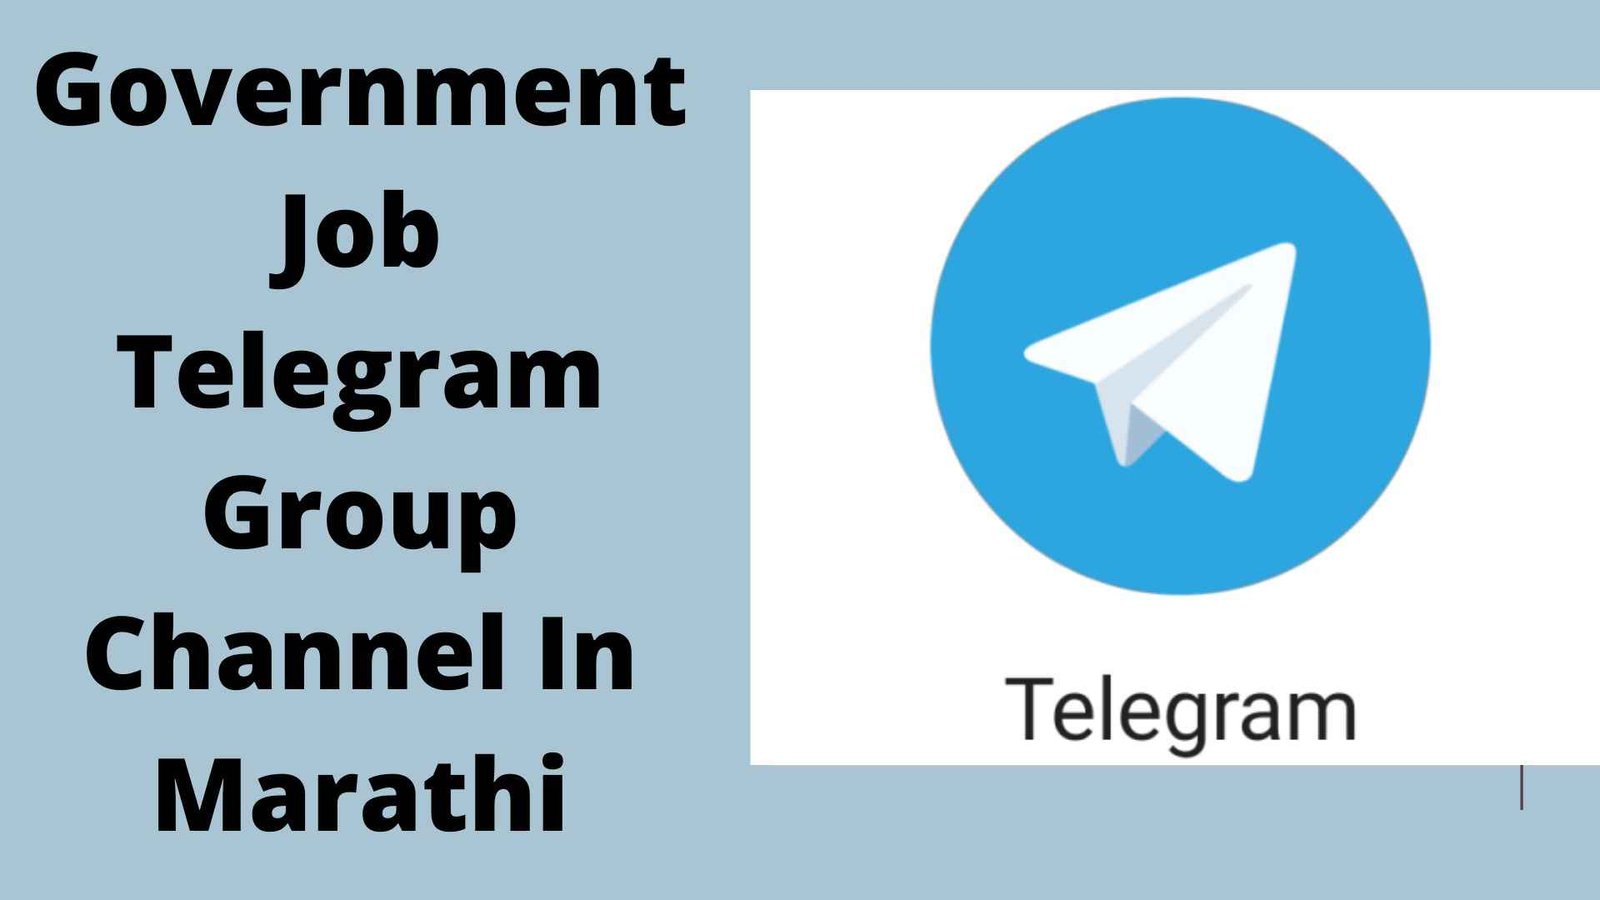 सरकारी नौकरी टेलिग्राम ग्रुप लिंक | Government Job Telegram Group Channel In Marathi